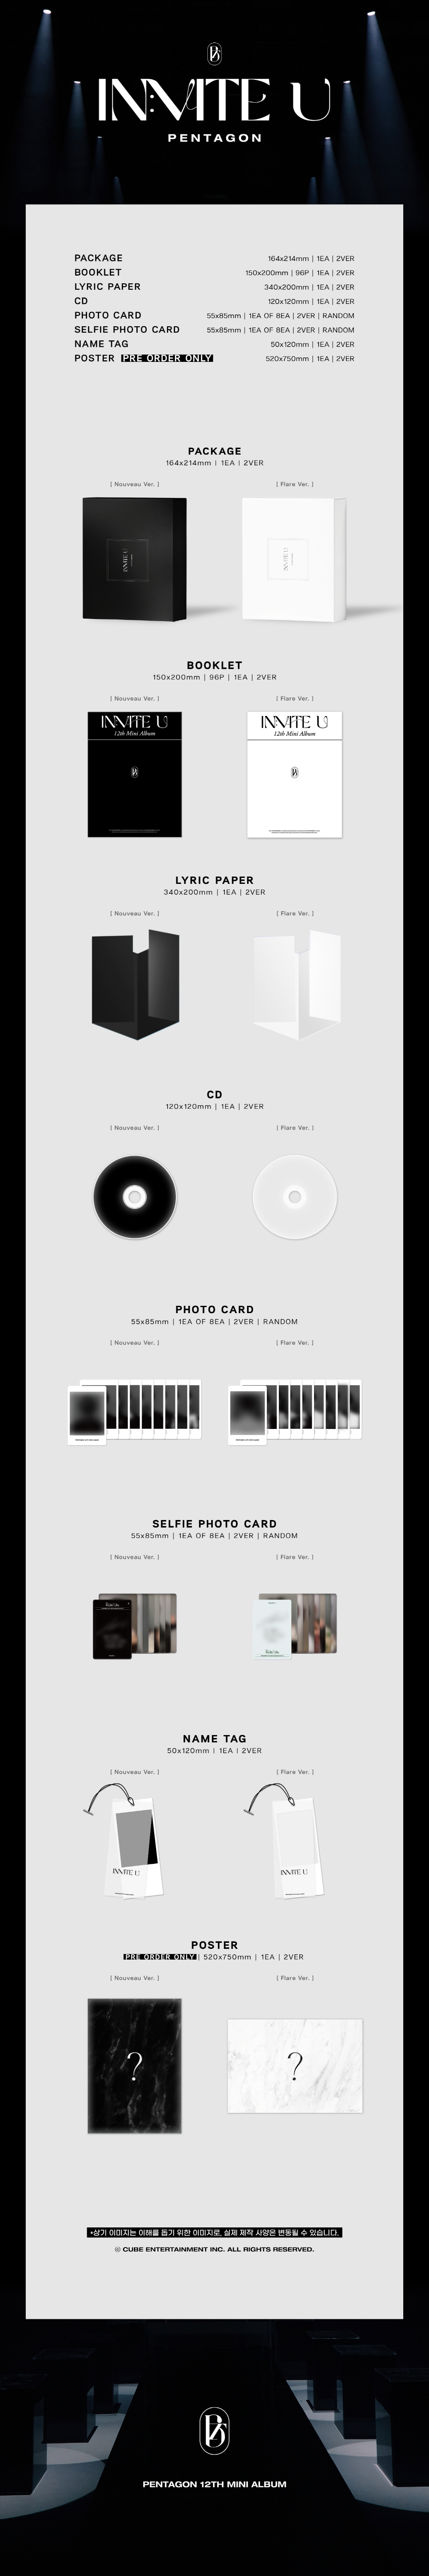 PENTAGON - 12th Mini Album [IN:VITE U] PENTAGON PENTAGONalbum IN:VITE U PENTAGONIN:VITE U CD album photobook photocard kpop